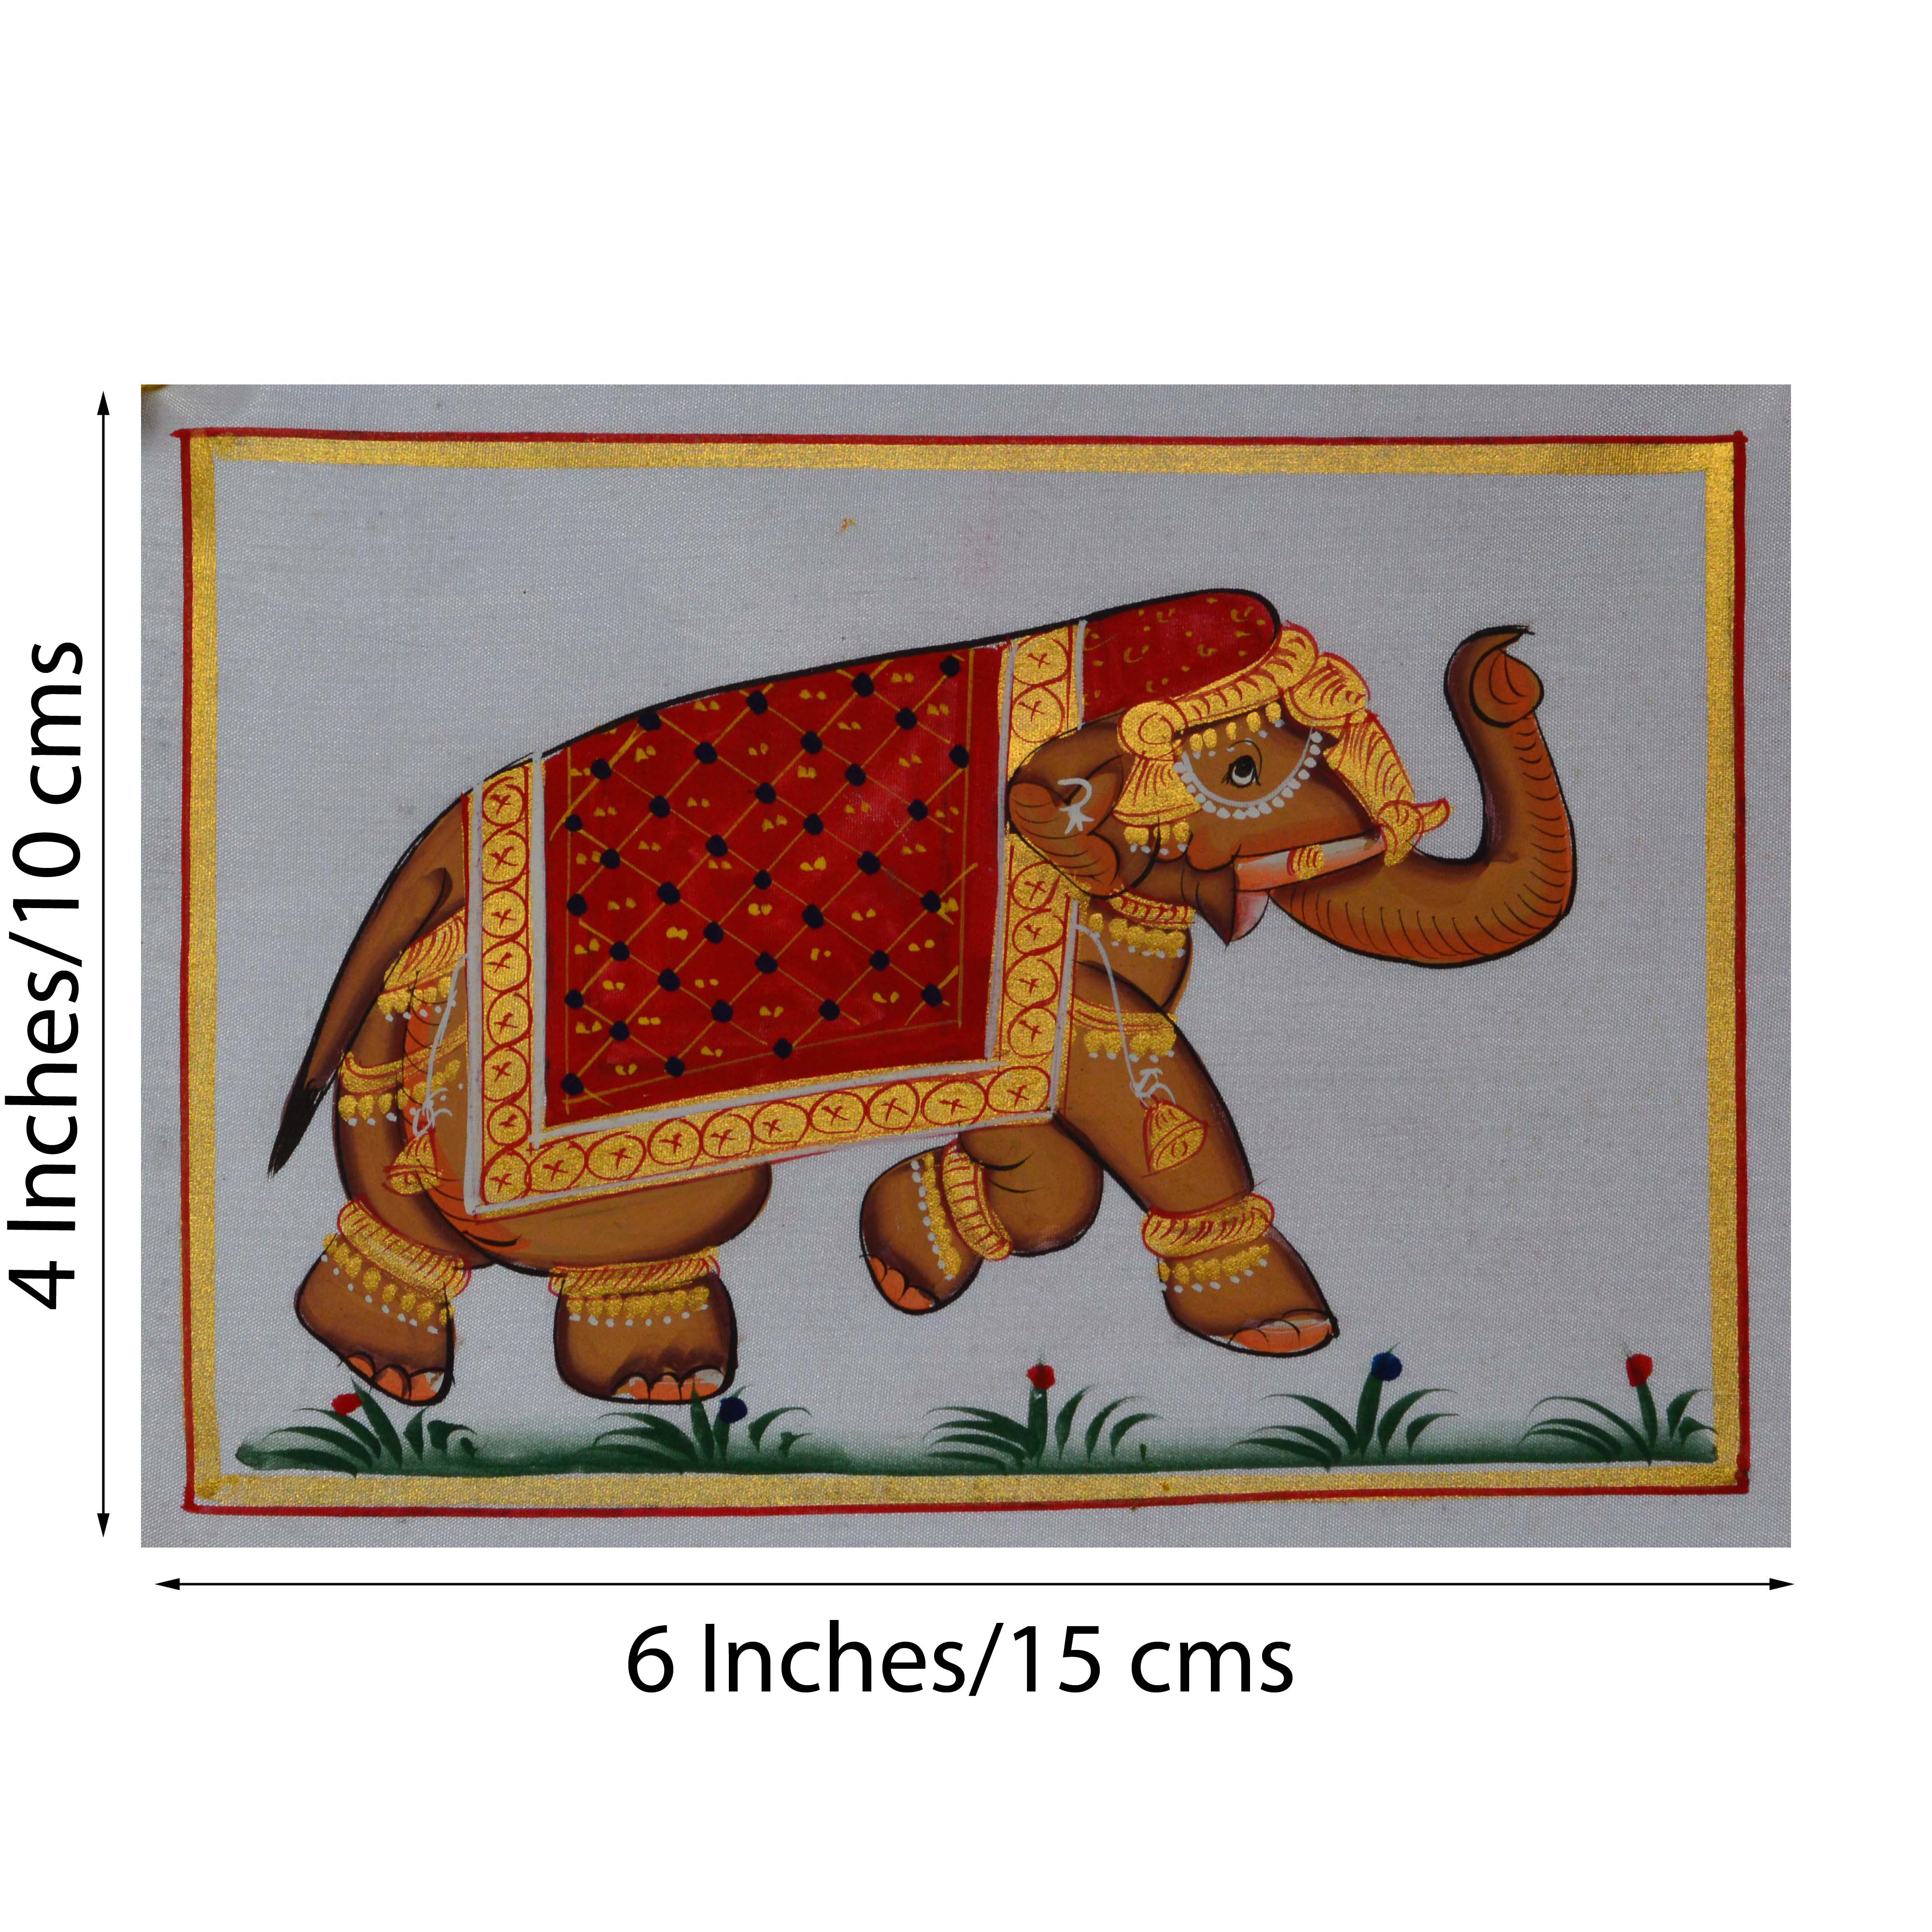 Royal Elephant Original Art Silk Painting 1